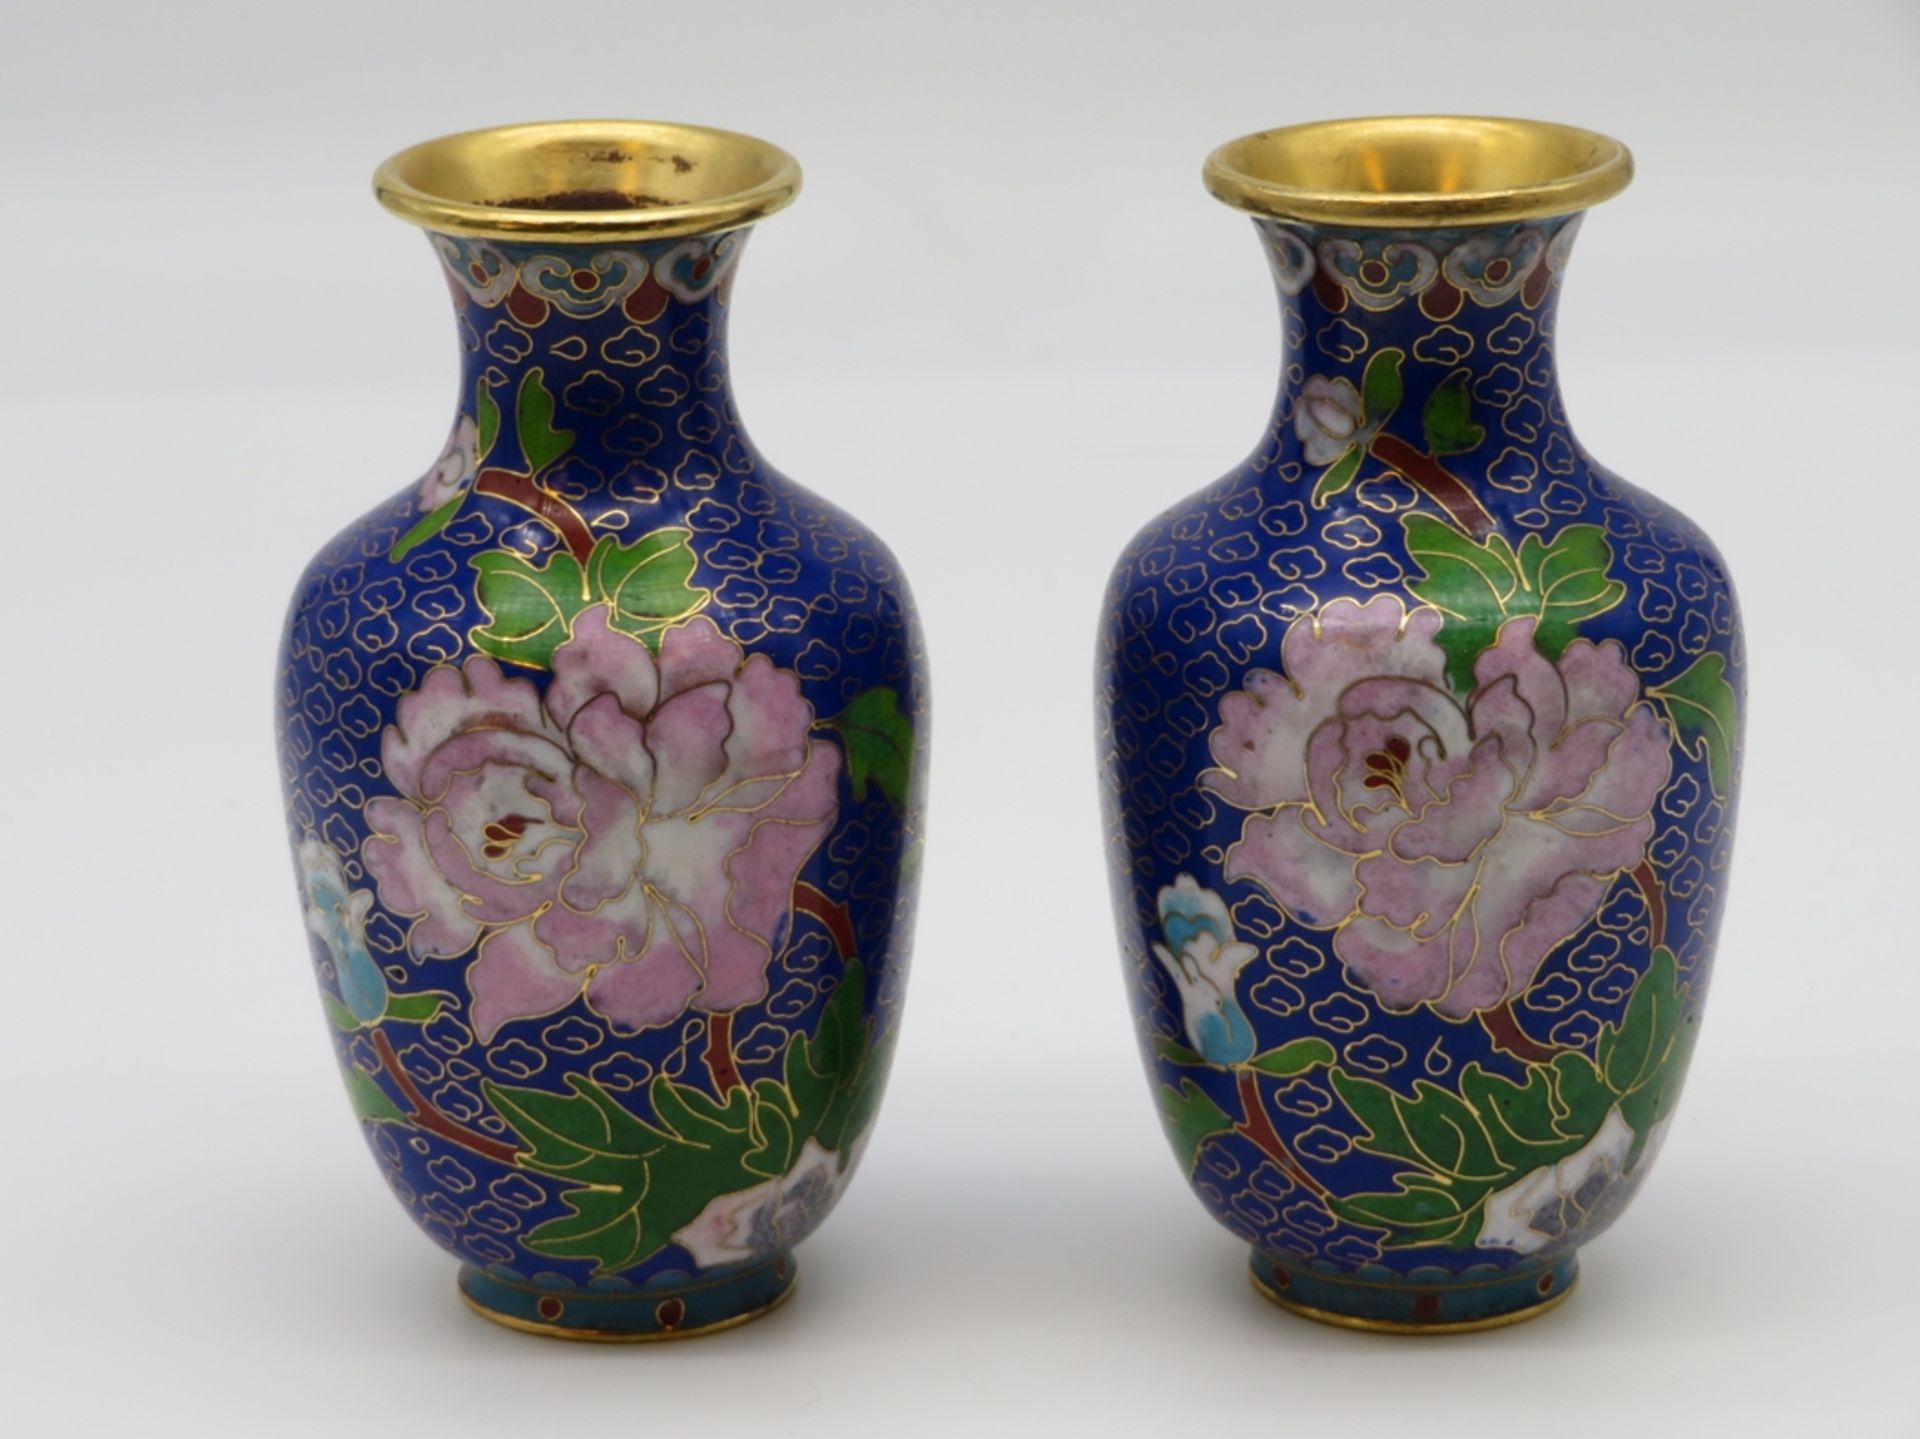 2 Cloisonné Vasen, China, farbiger Zellenschmelz mit Blütendekor, h 12,5 cm, d 7 cm.